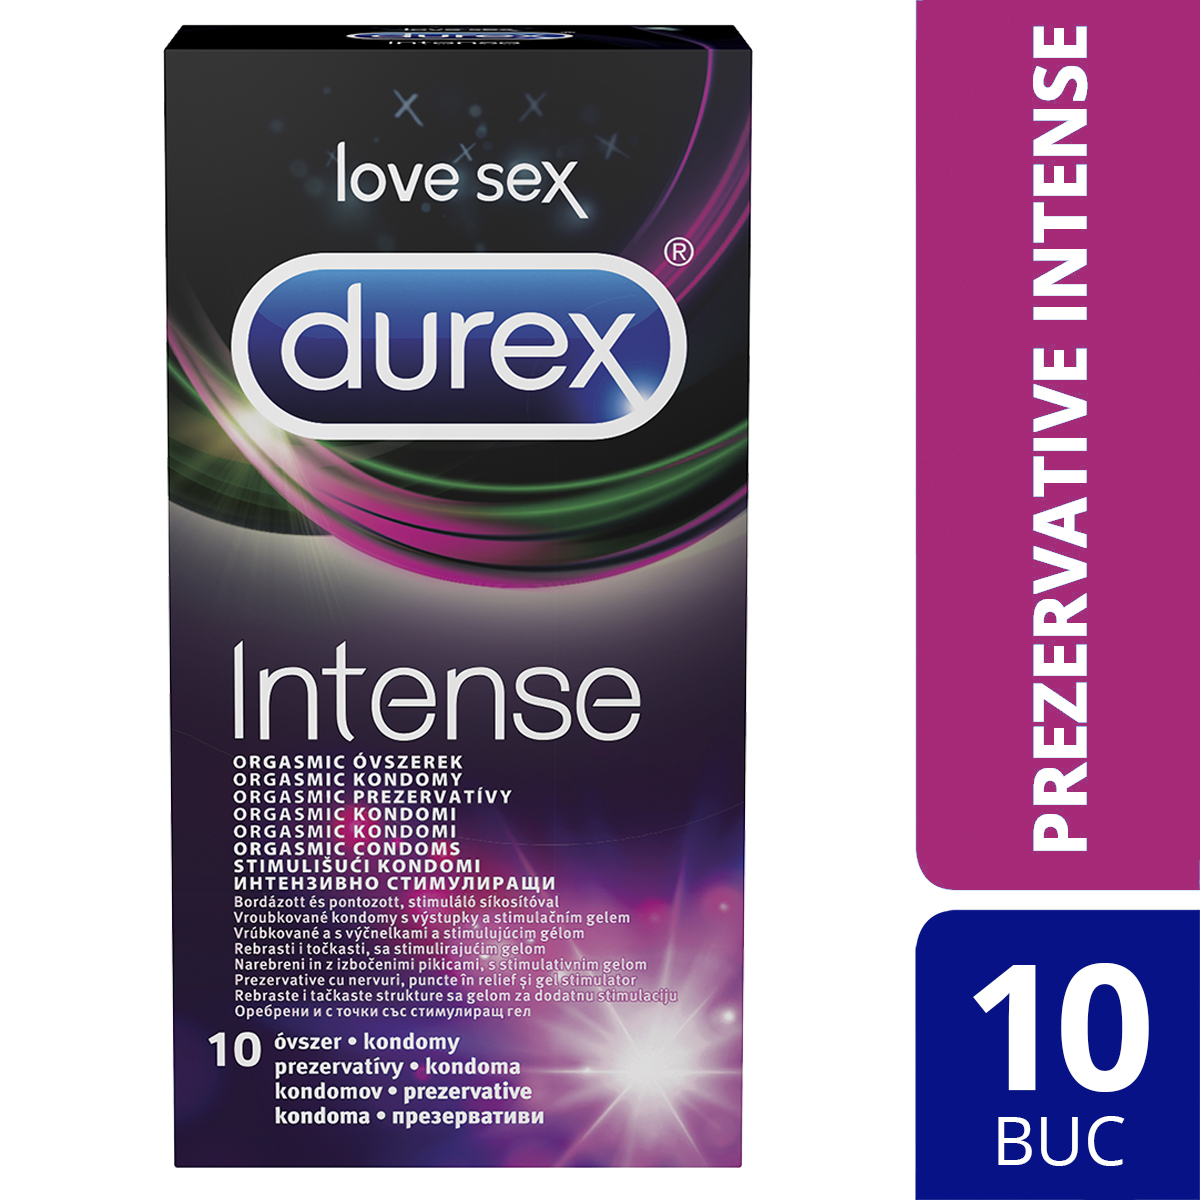 Protecție și lubrefiere - Durex intense orgasmic*10buc, epastila.ro